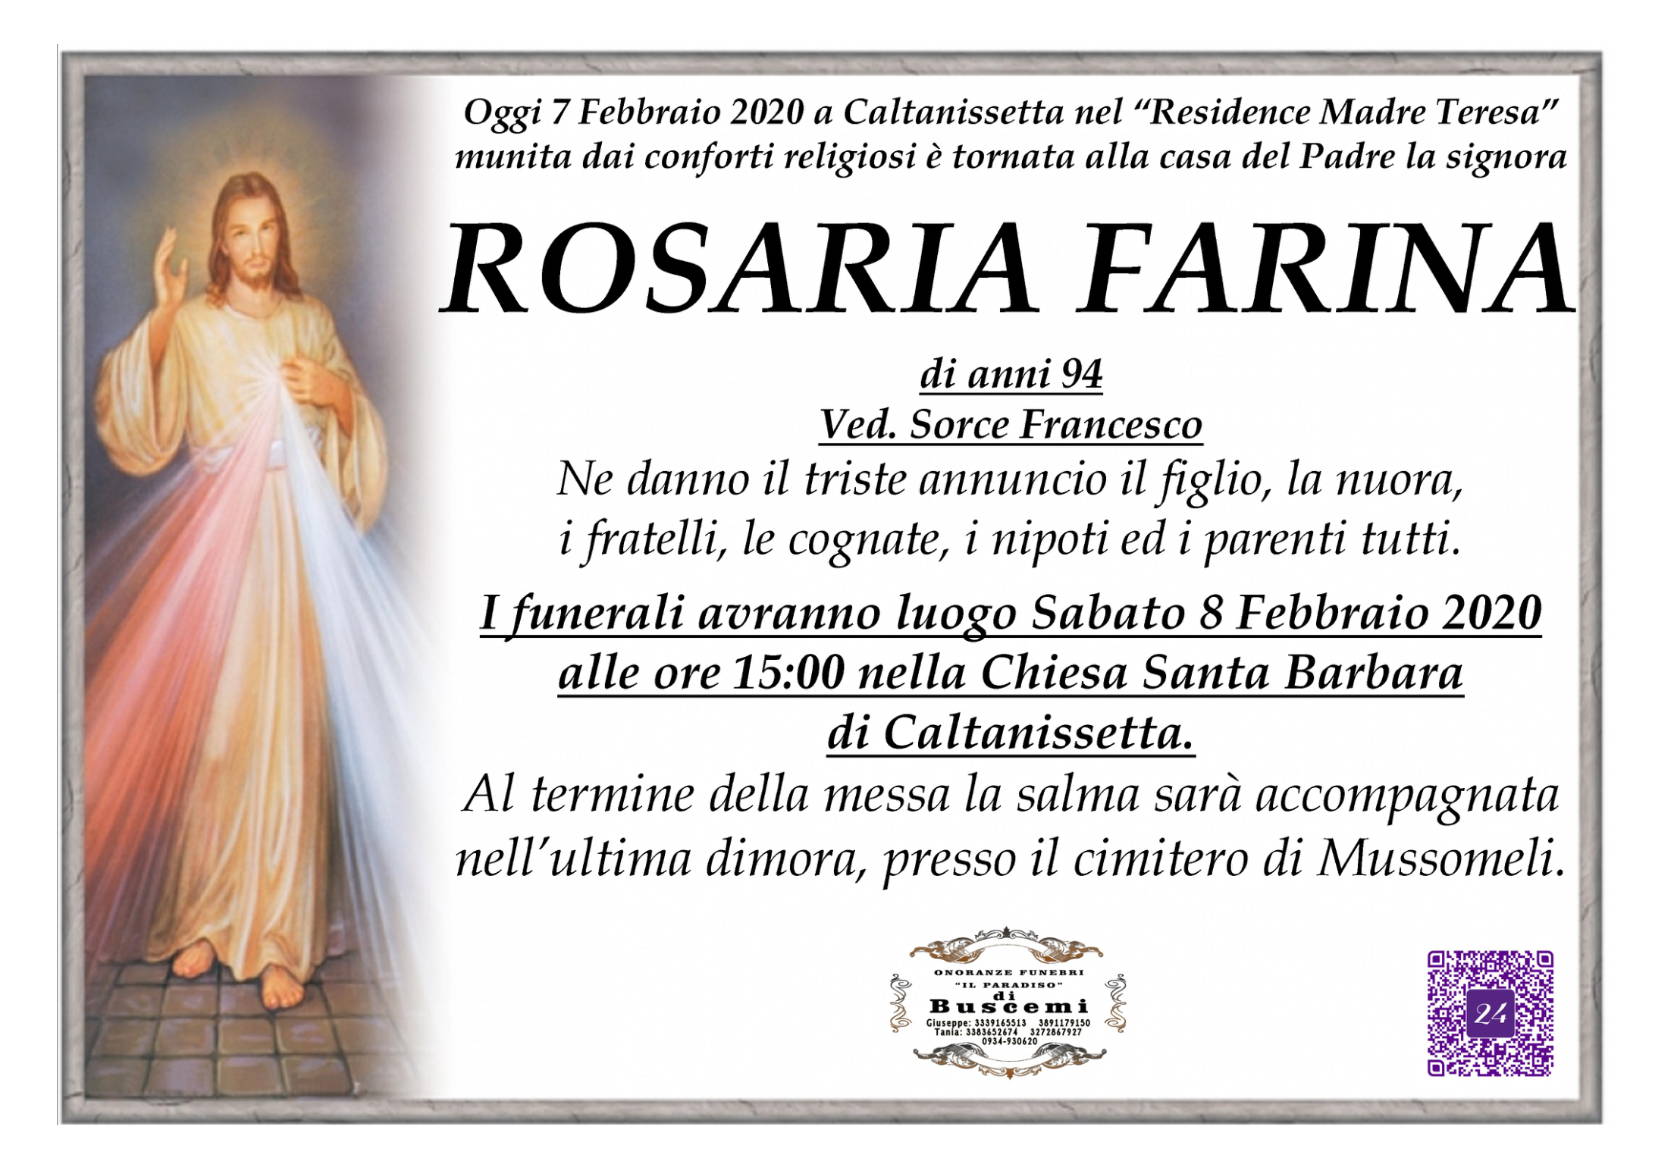 Rosaria Farina